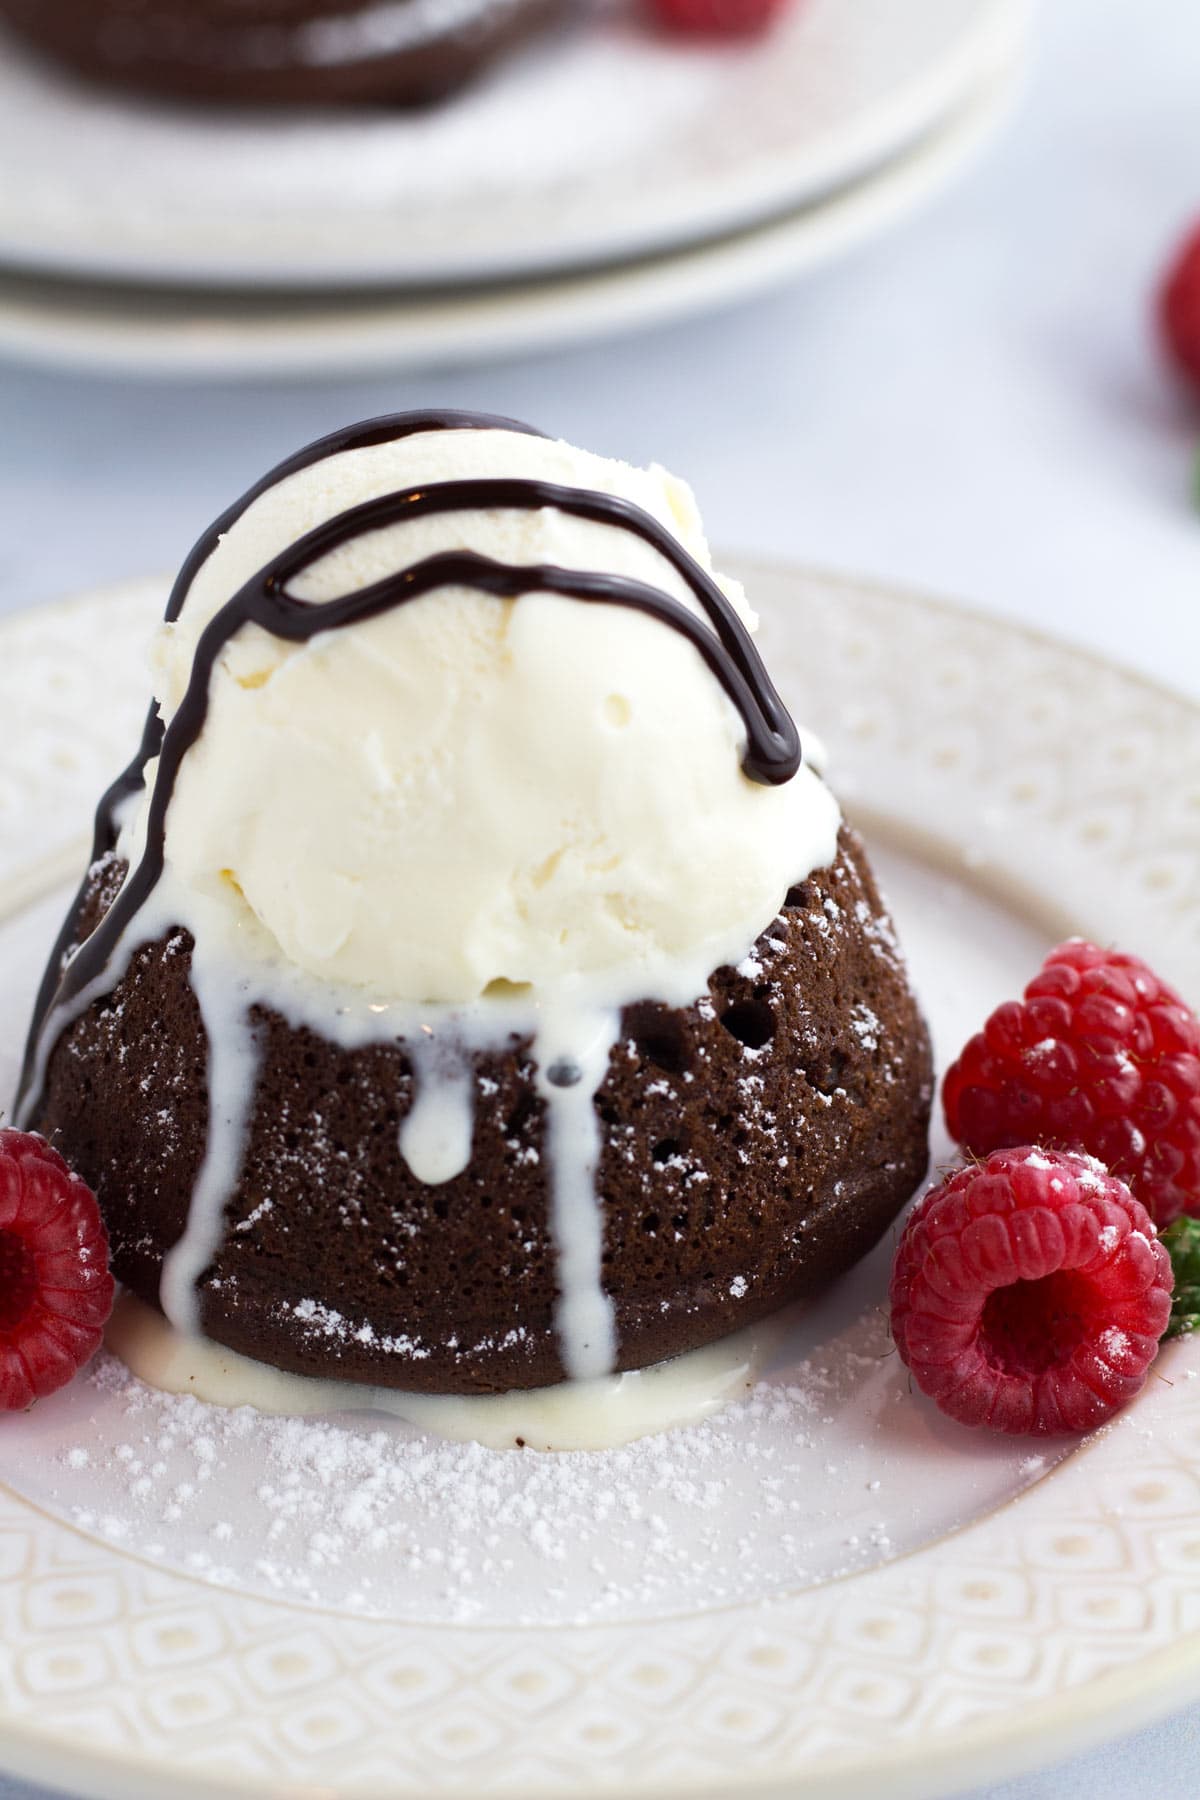 Scoop of ice cream on warm chocolate lava cake.